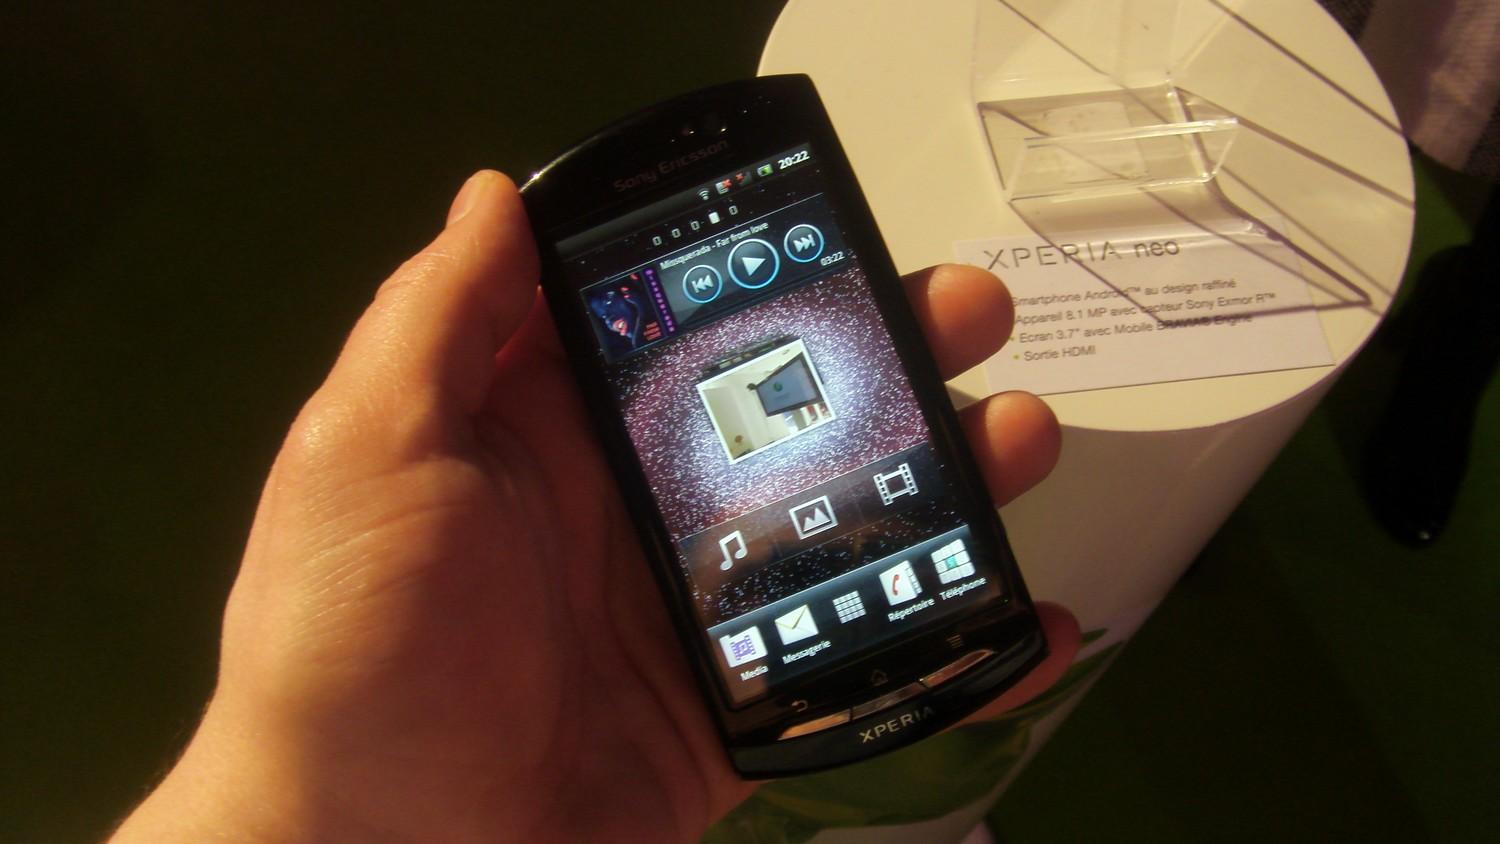 xperia arc sony ericsson oosgame weebeetroc [compte rendu] Soirée de présentation Sony Ericsson Xperia.